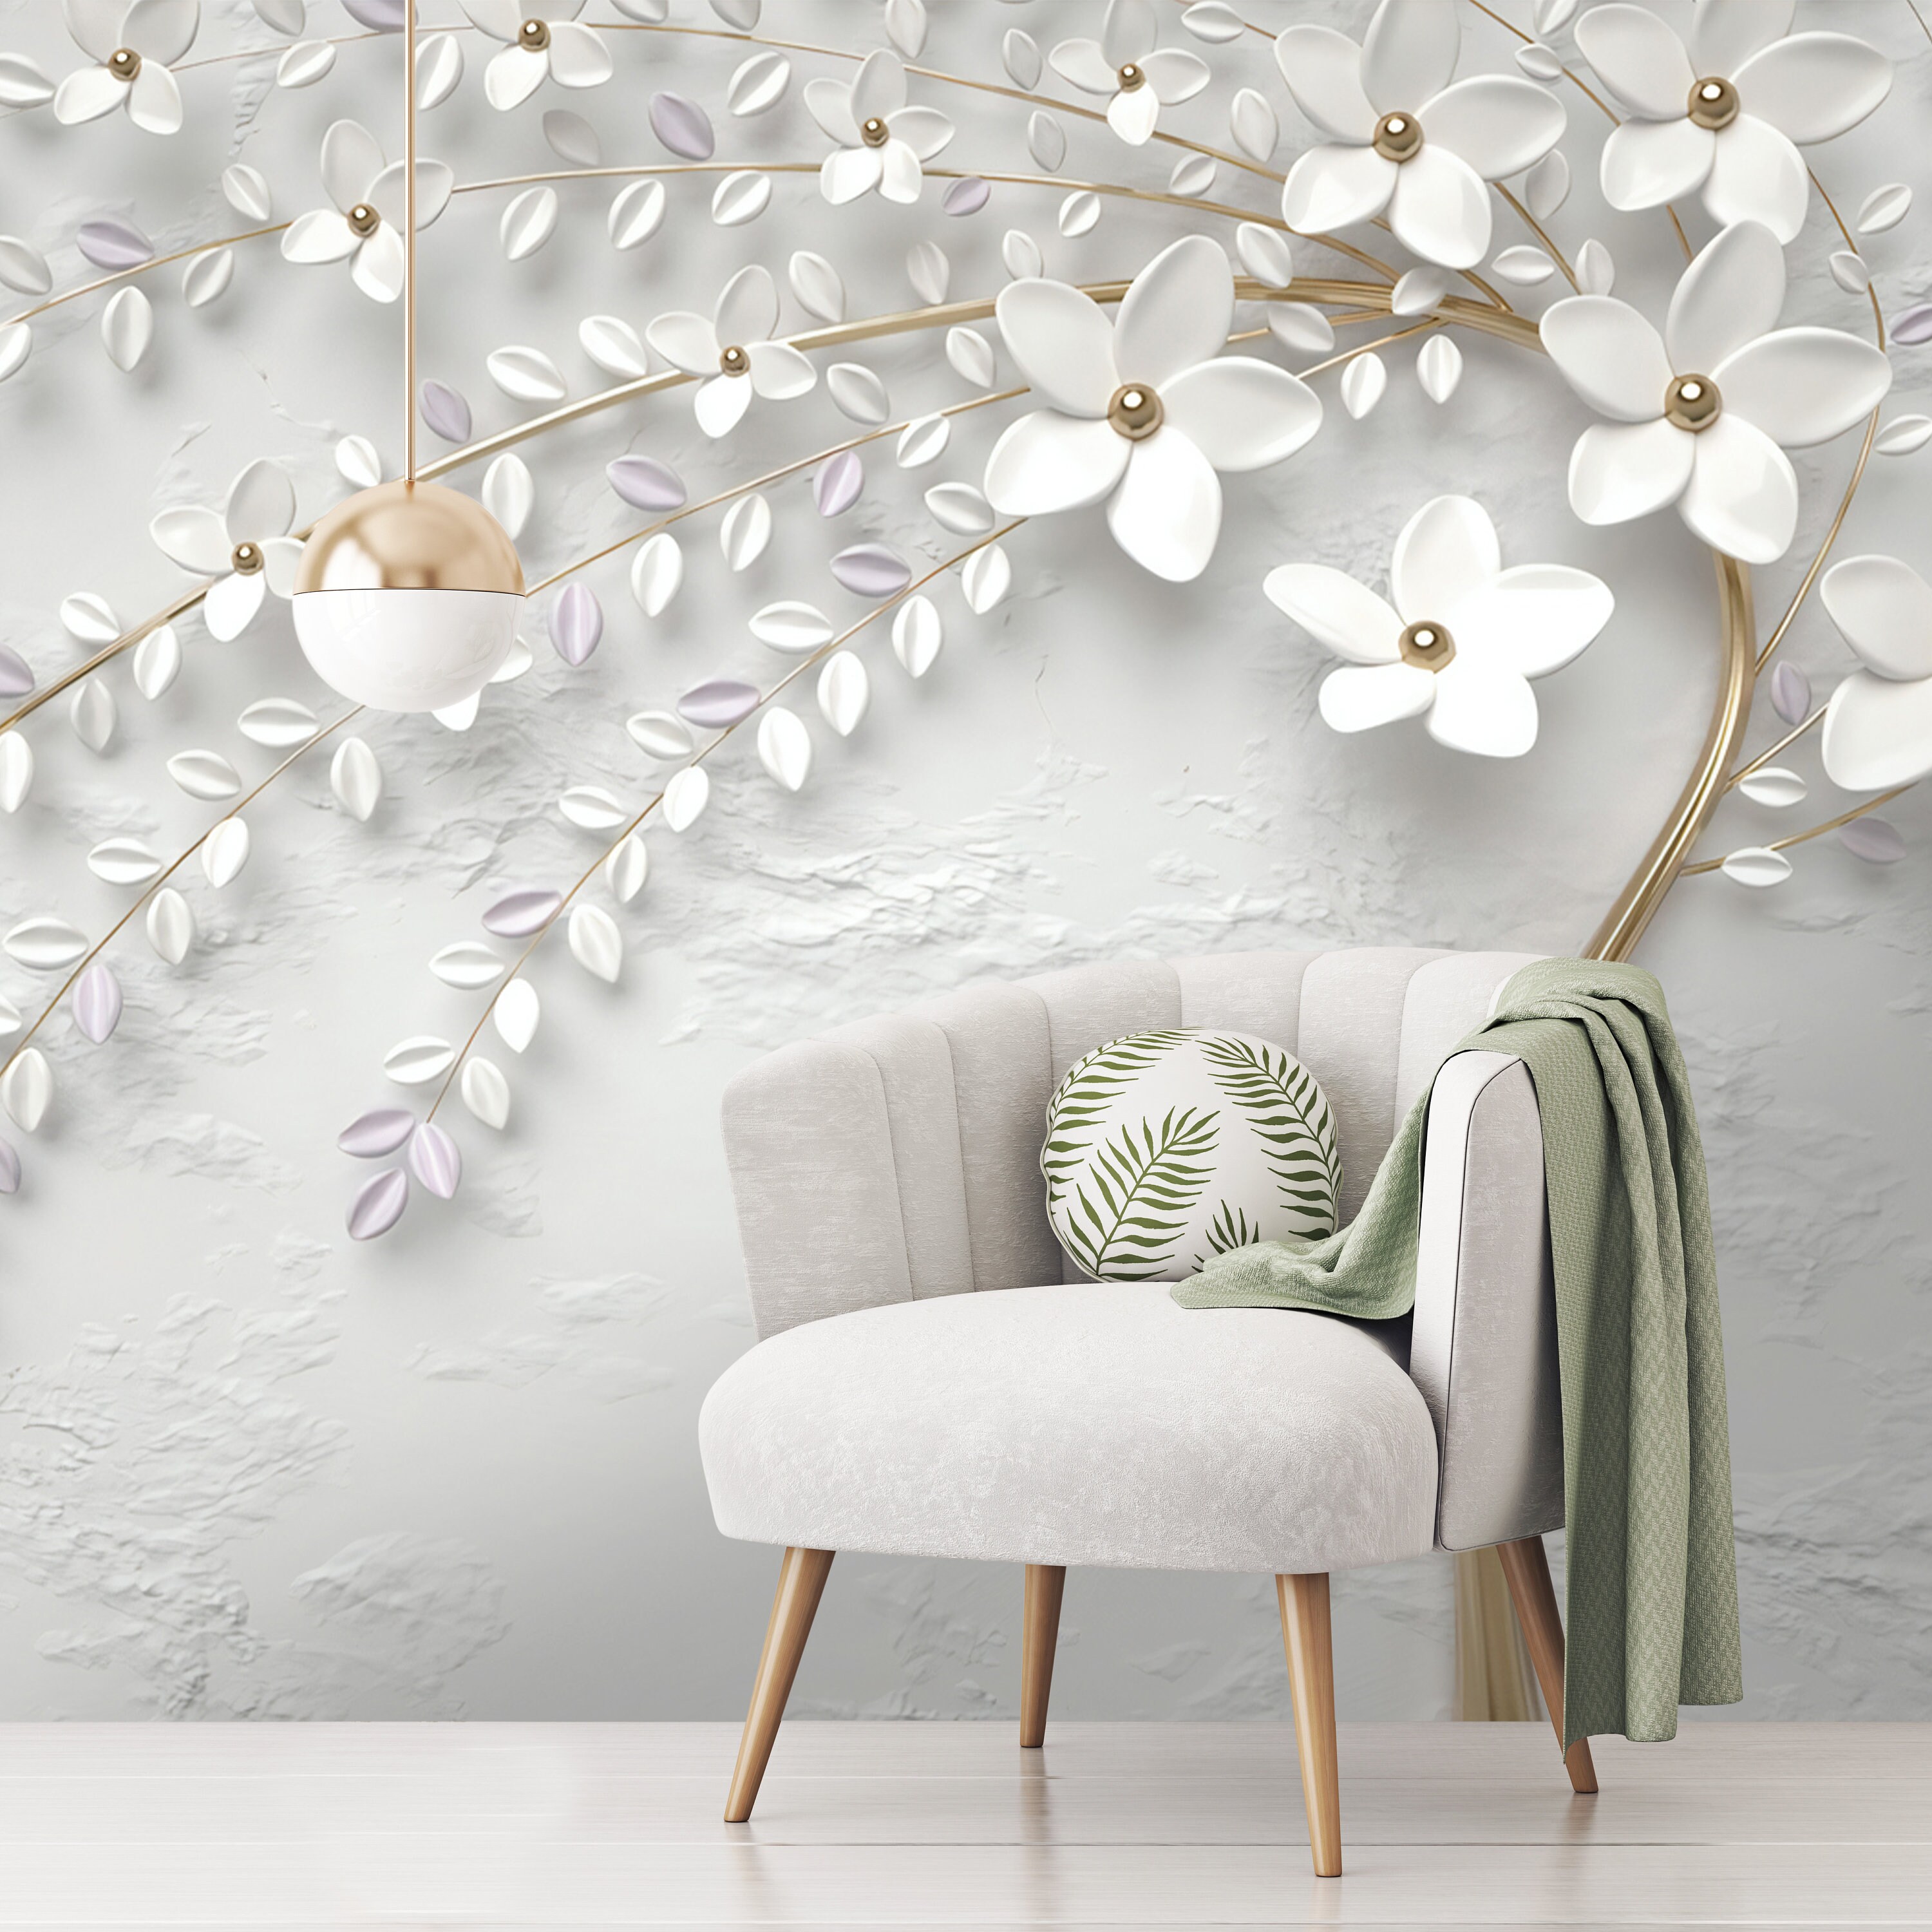 3d Golden tree and white flowers wallpaper  Living room wallpaper for –  Home Decoram